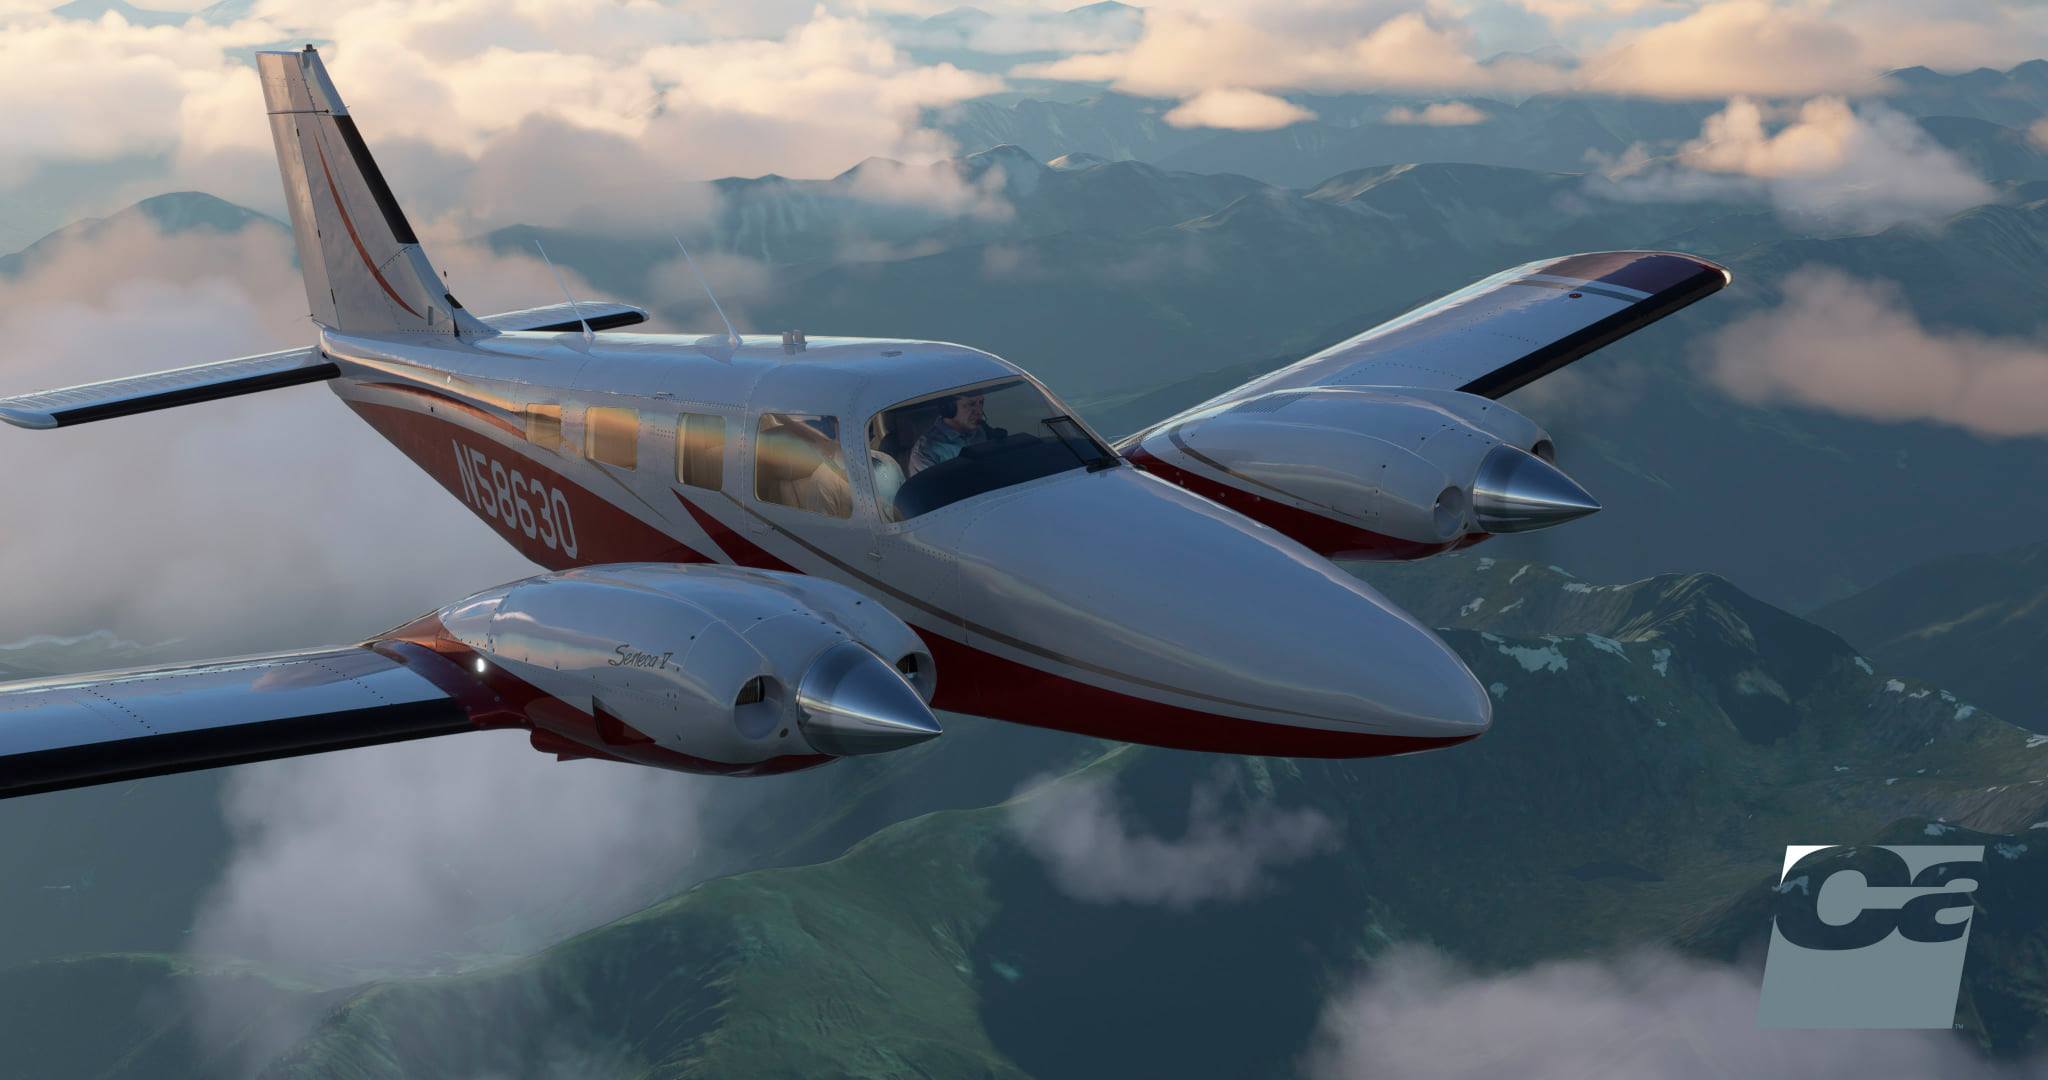 Le Piper PA34 Seneca V de Carenado disponible pour Flight Simulator